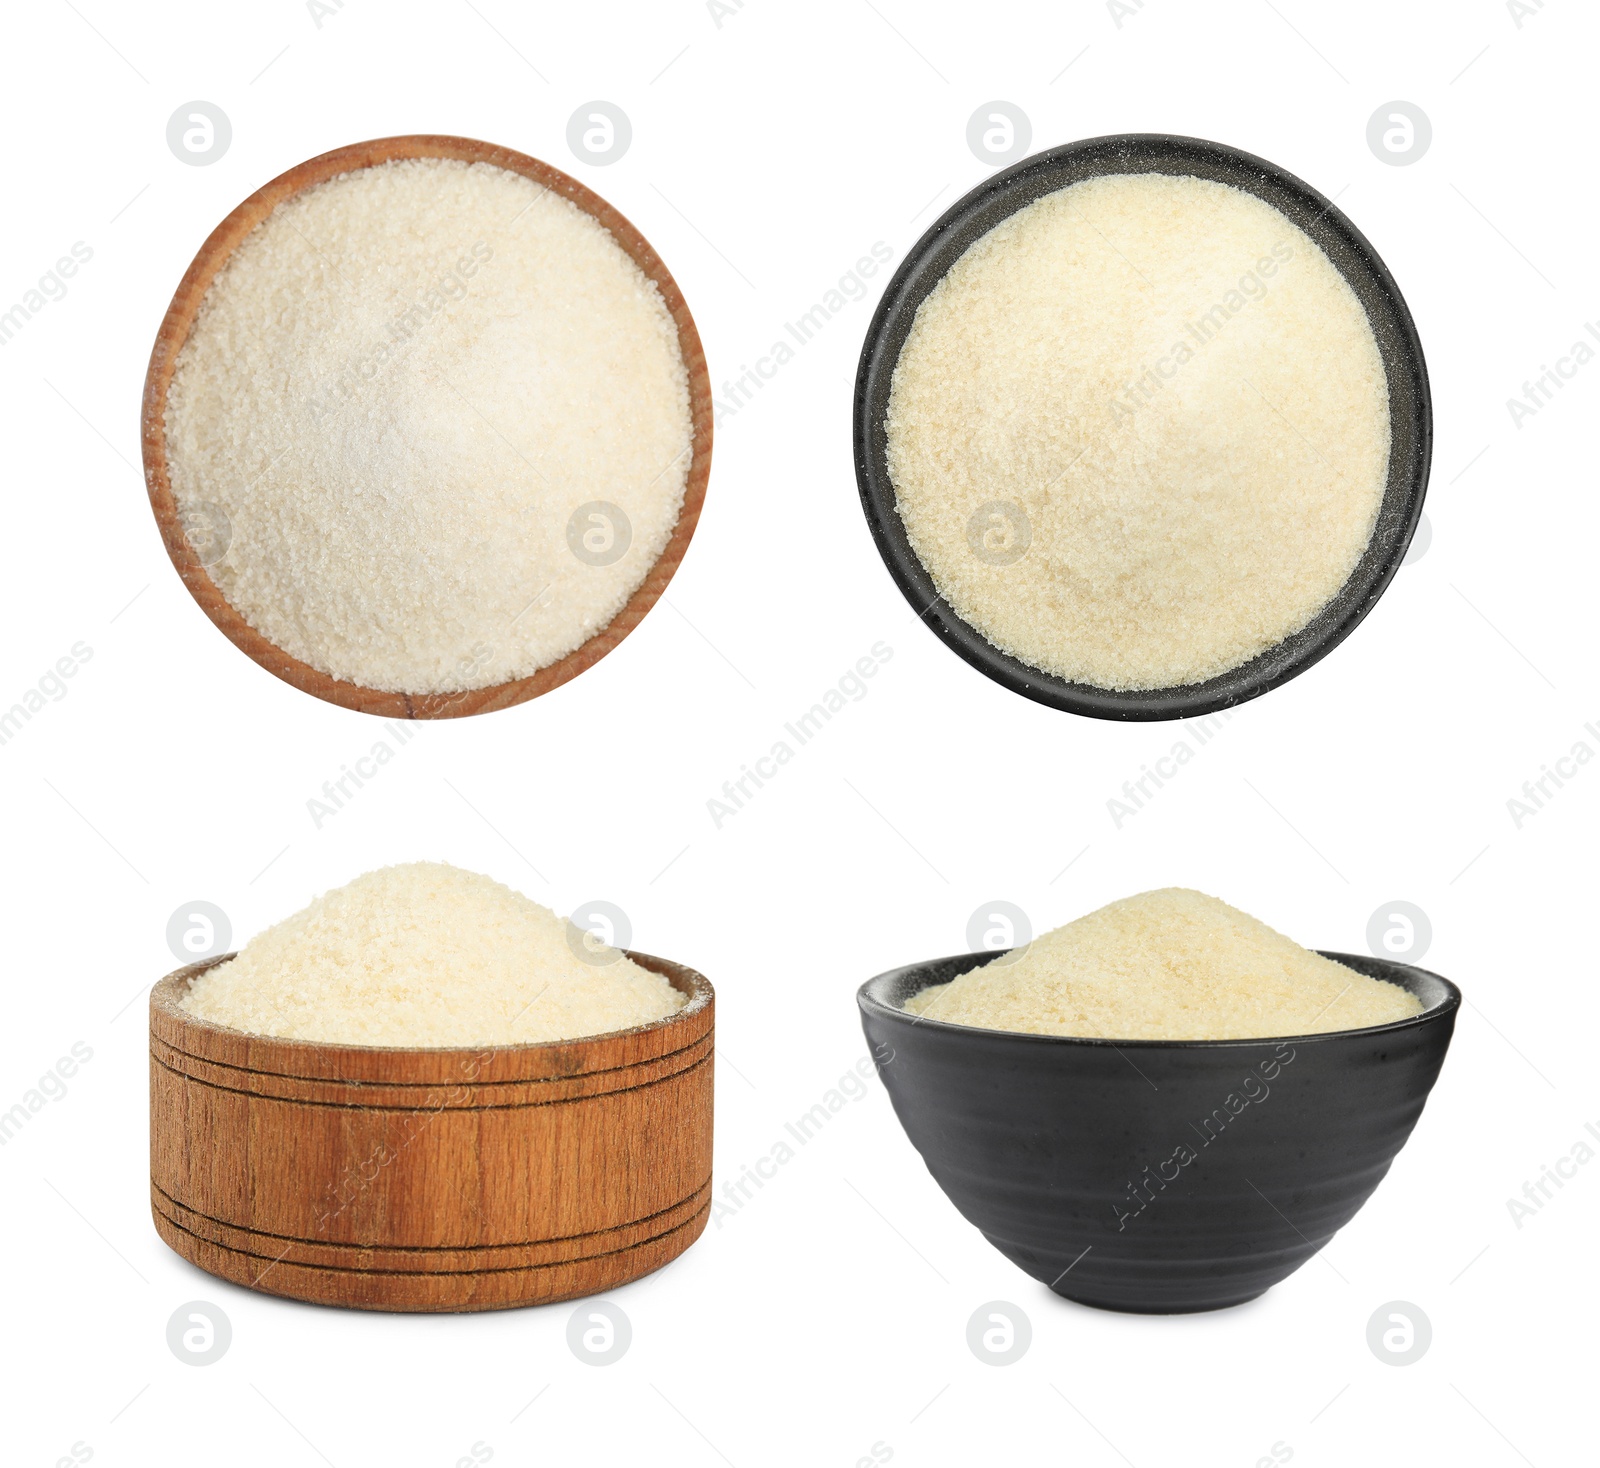 Image of Gelatin powder in bowls on white background, collage 